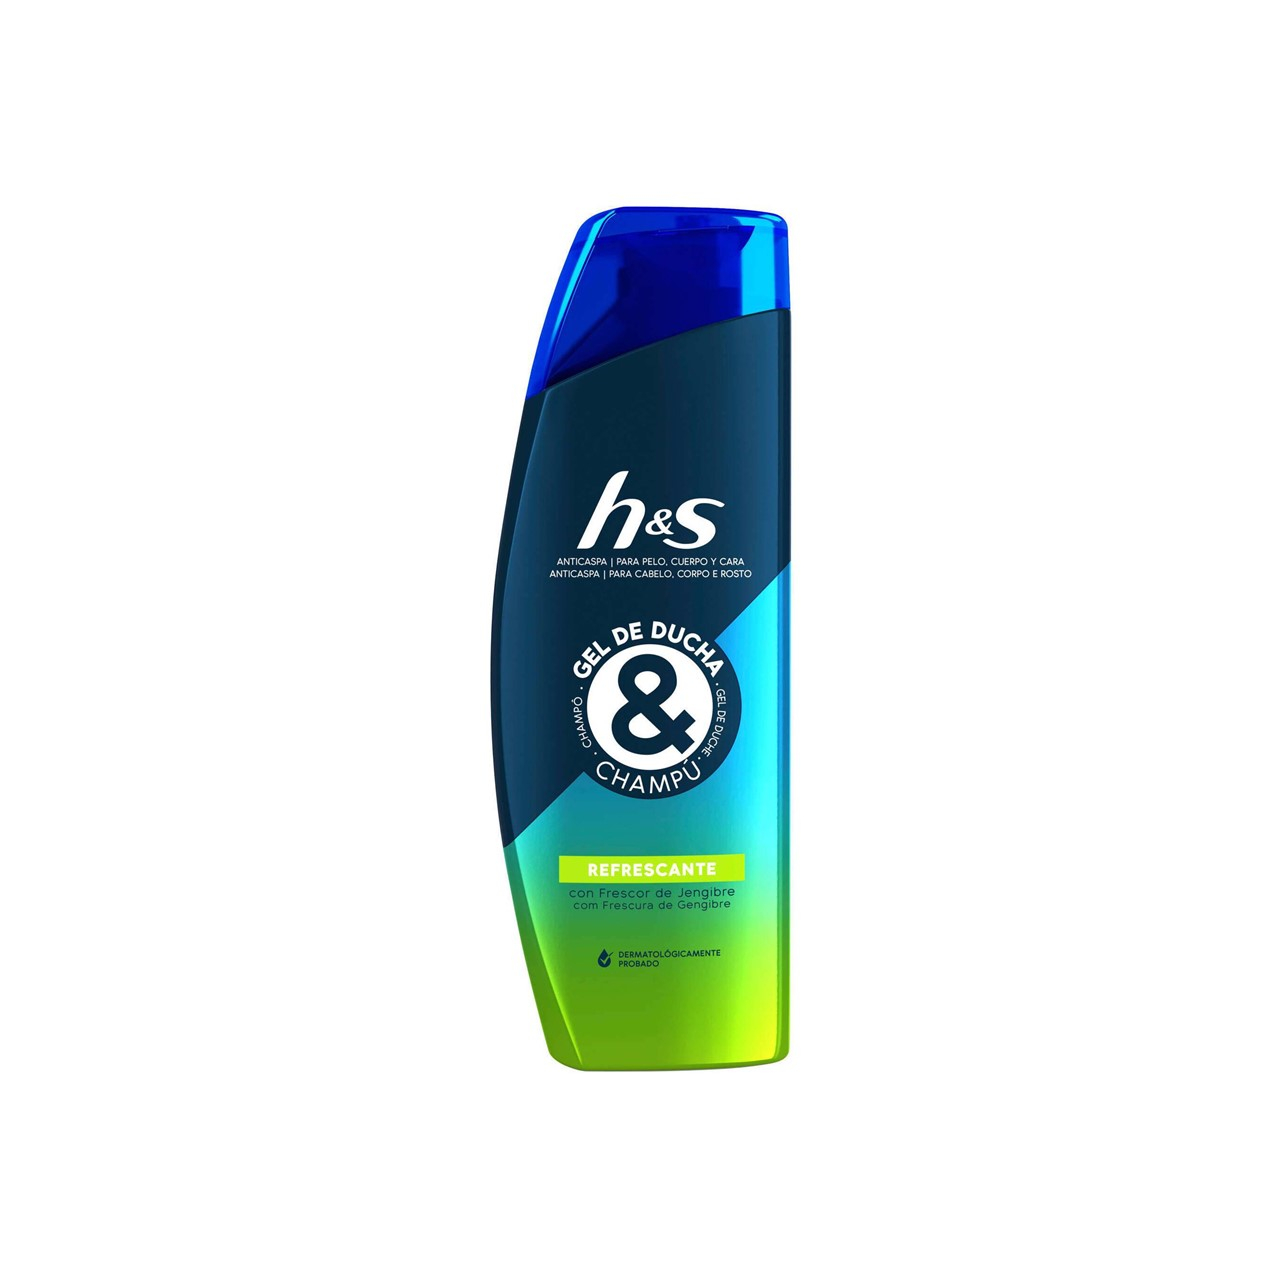 H&S Refreshing Shower Gel & Shampoo 300ml